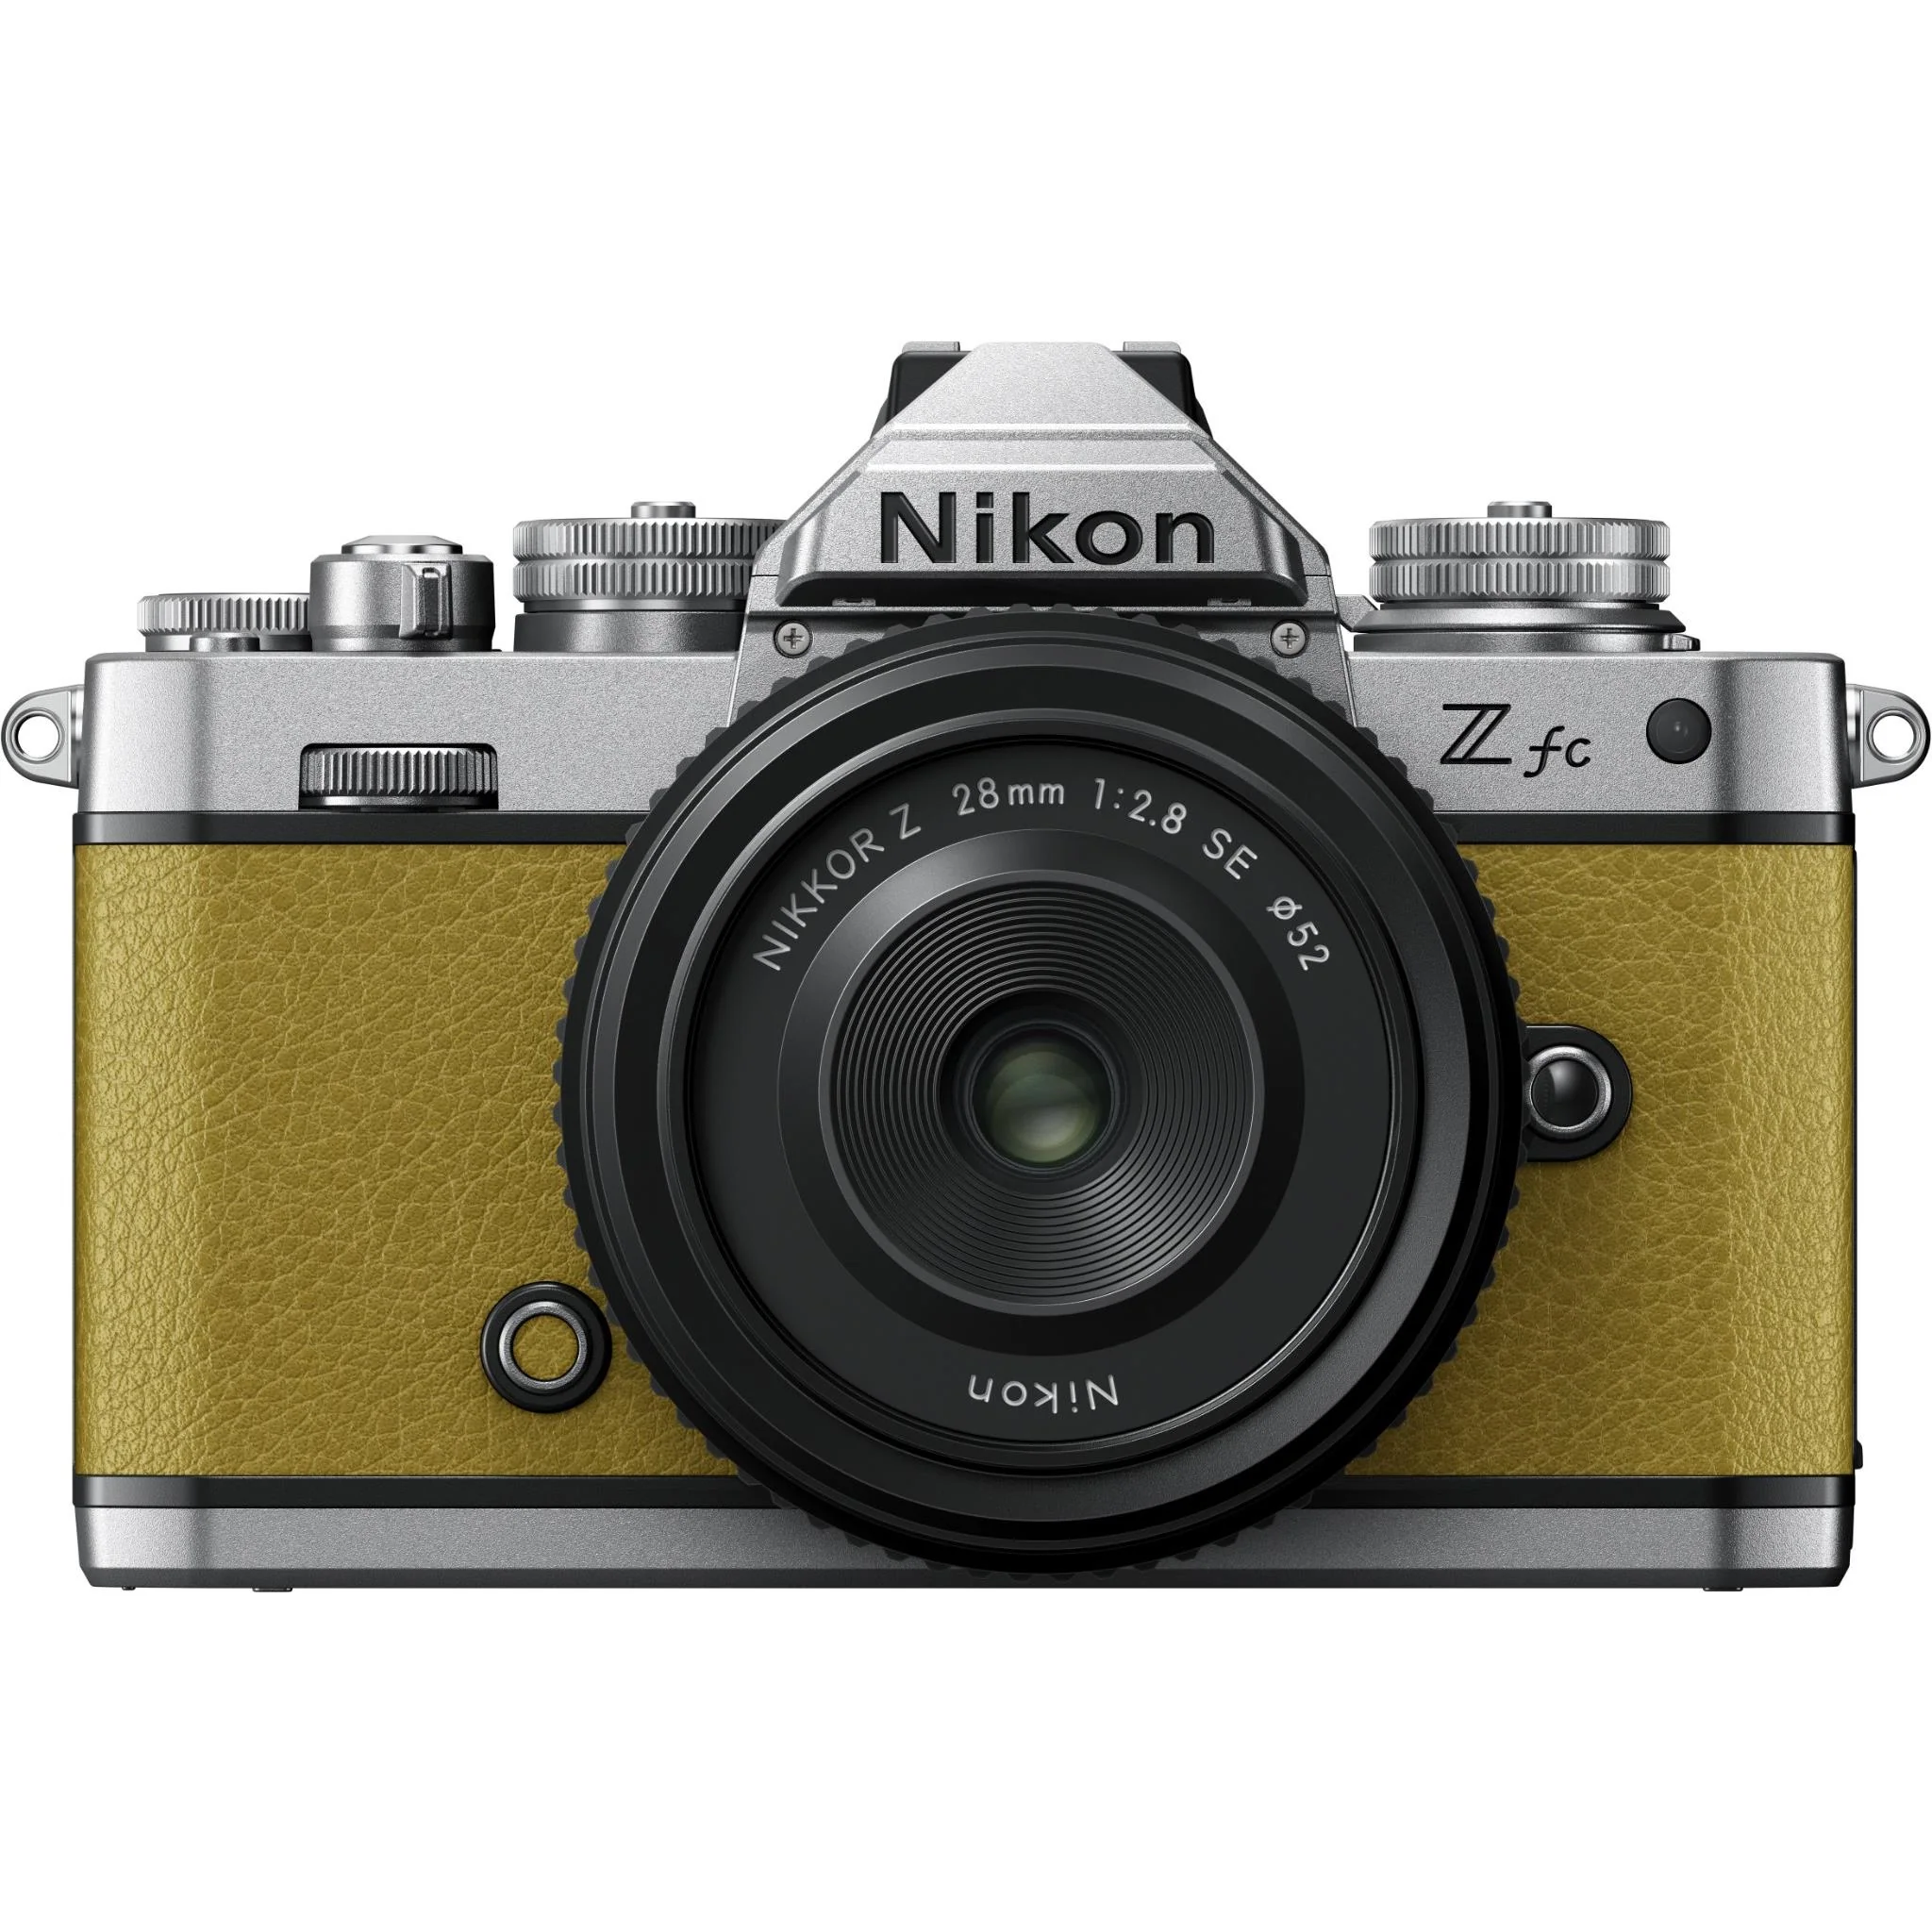 Nikon Z Fc Mirrorless Camera With Nikkor Z 28mm F/2.8 Lens (Mustard Yellow)